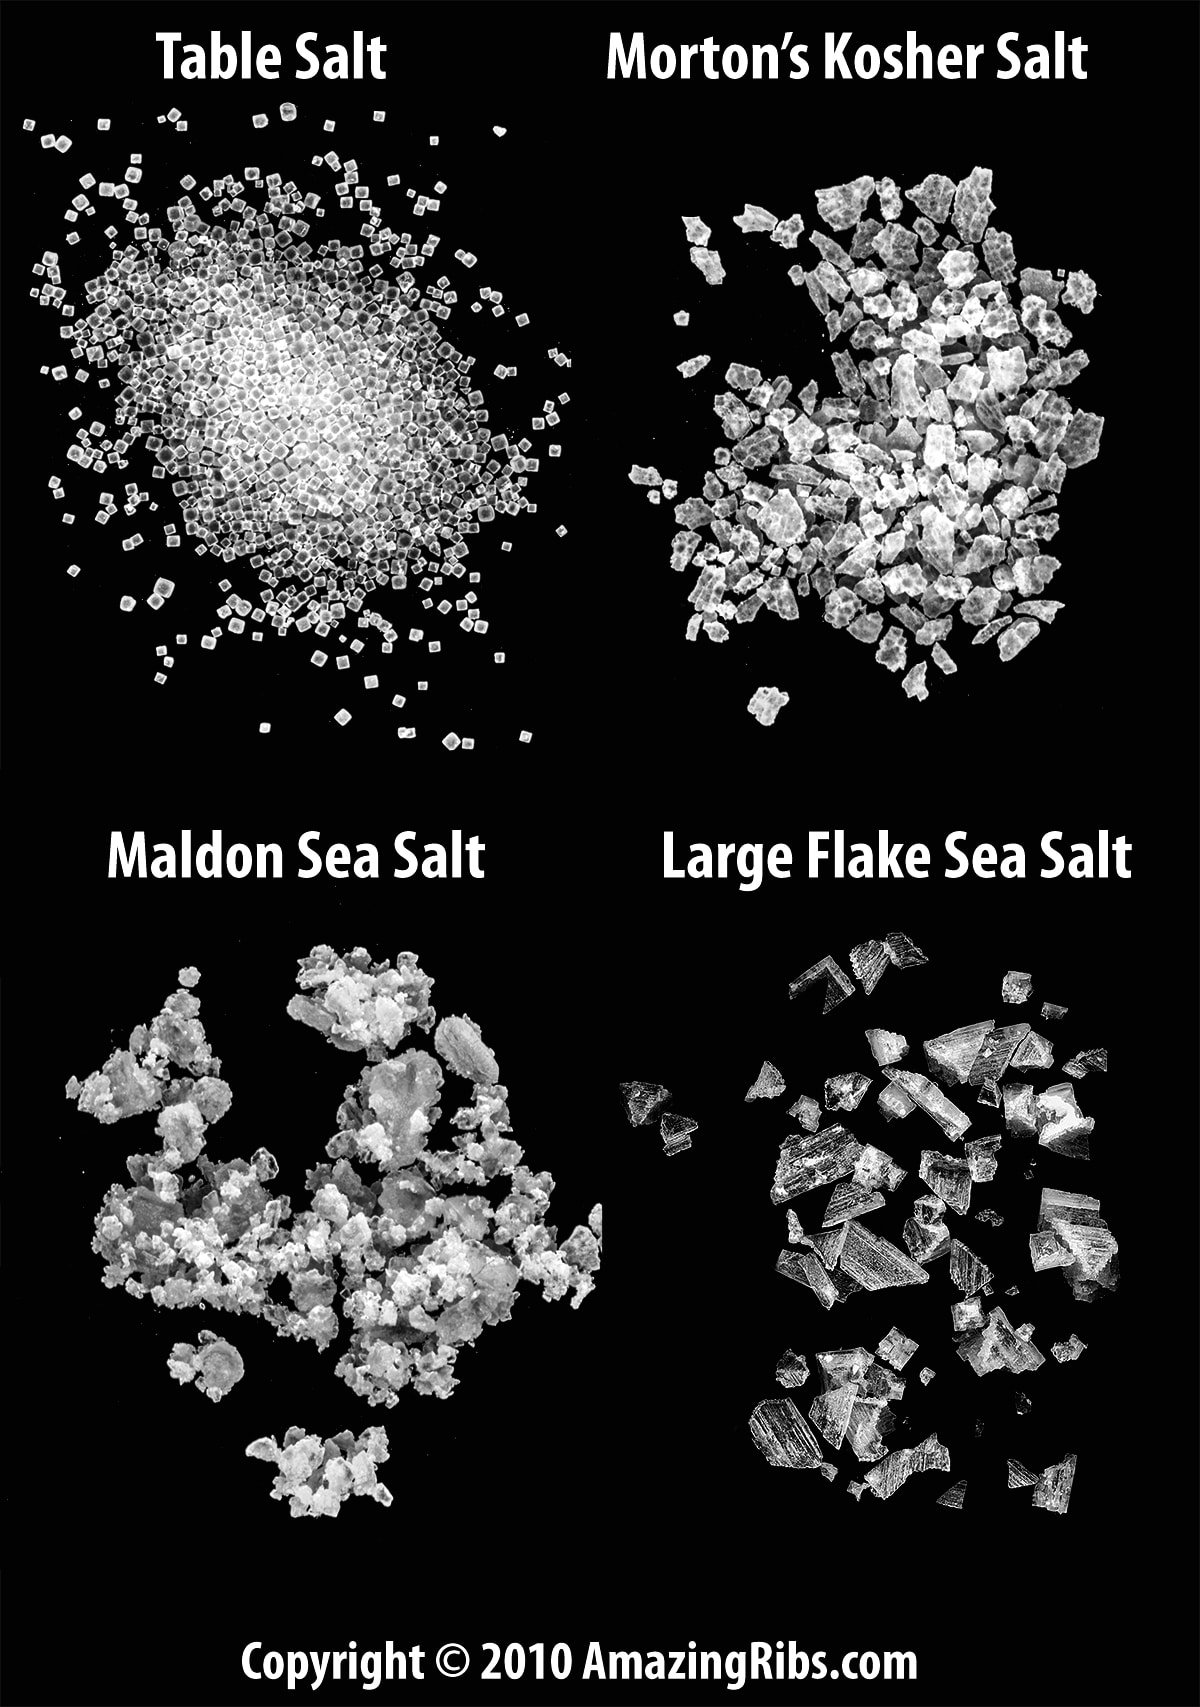 What Happened to Diamond Crystal Kosher Salt? - The New York Times